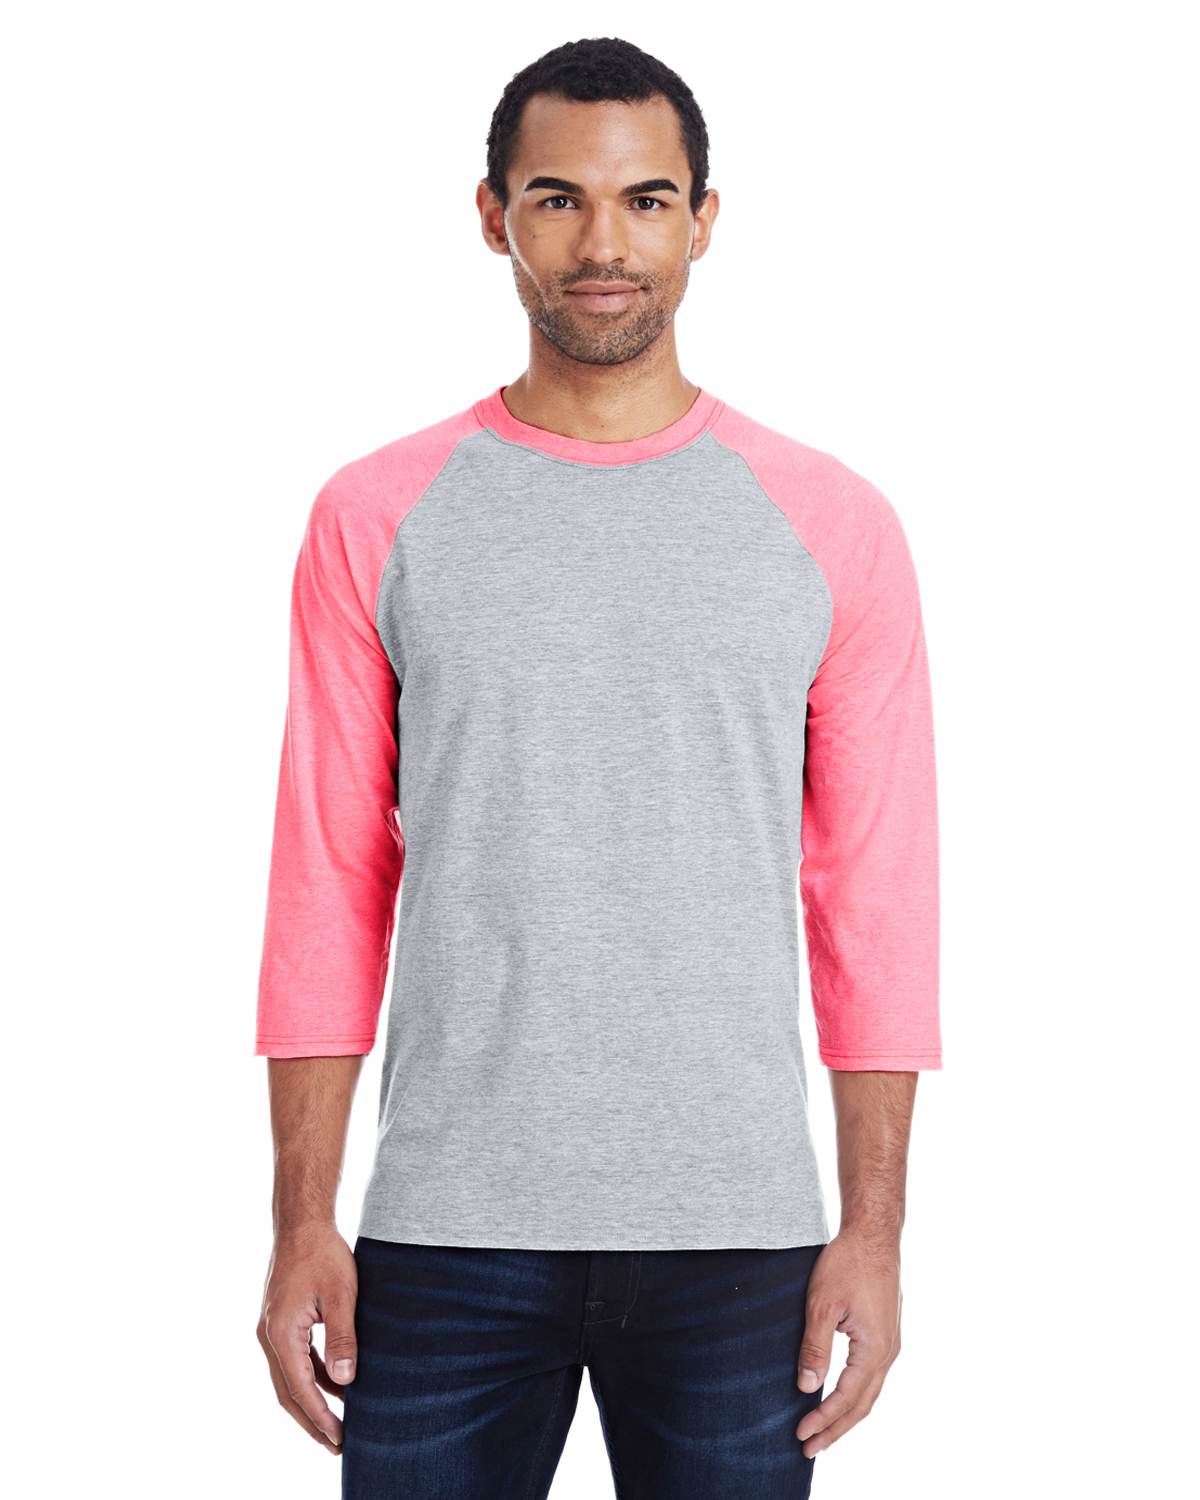 Hanes Men's 4.5 oz., 60/40 Ringspun Cotton/Polyester X-Temp® Baseball T-Shirt